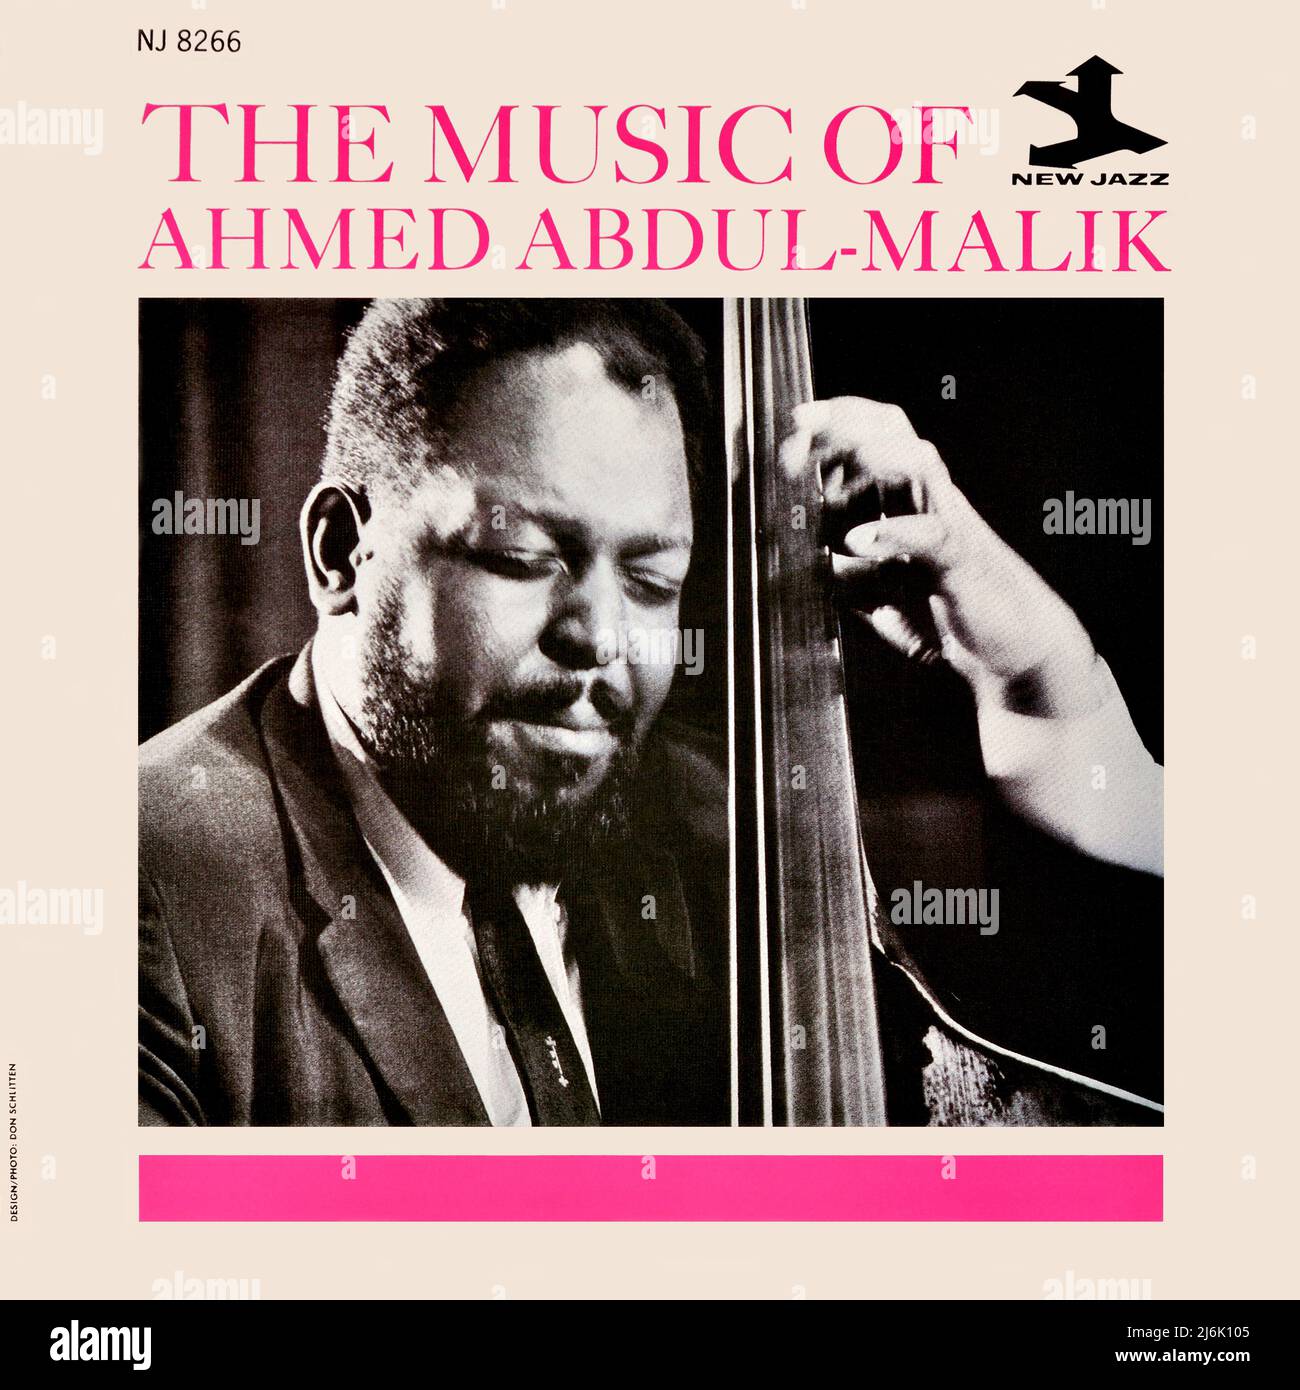 Ahmed Abdul-Malik - Original Vinyl Album Cover - The Music of Ahmed Abdul-Malik - 1961 Stockfoto